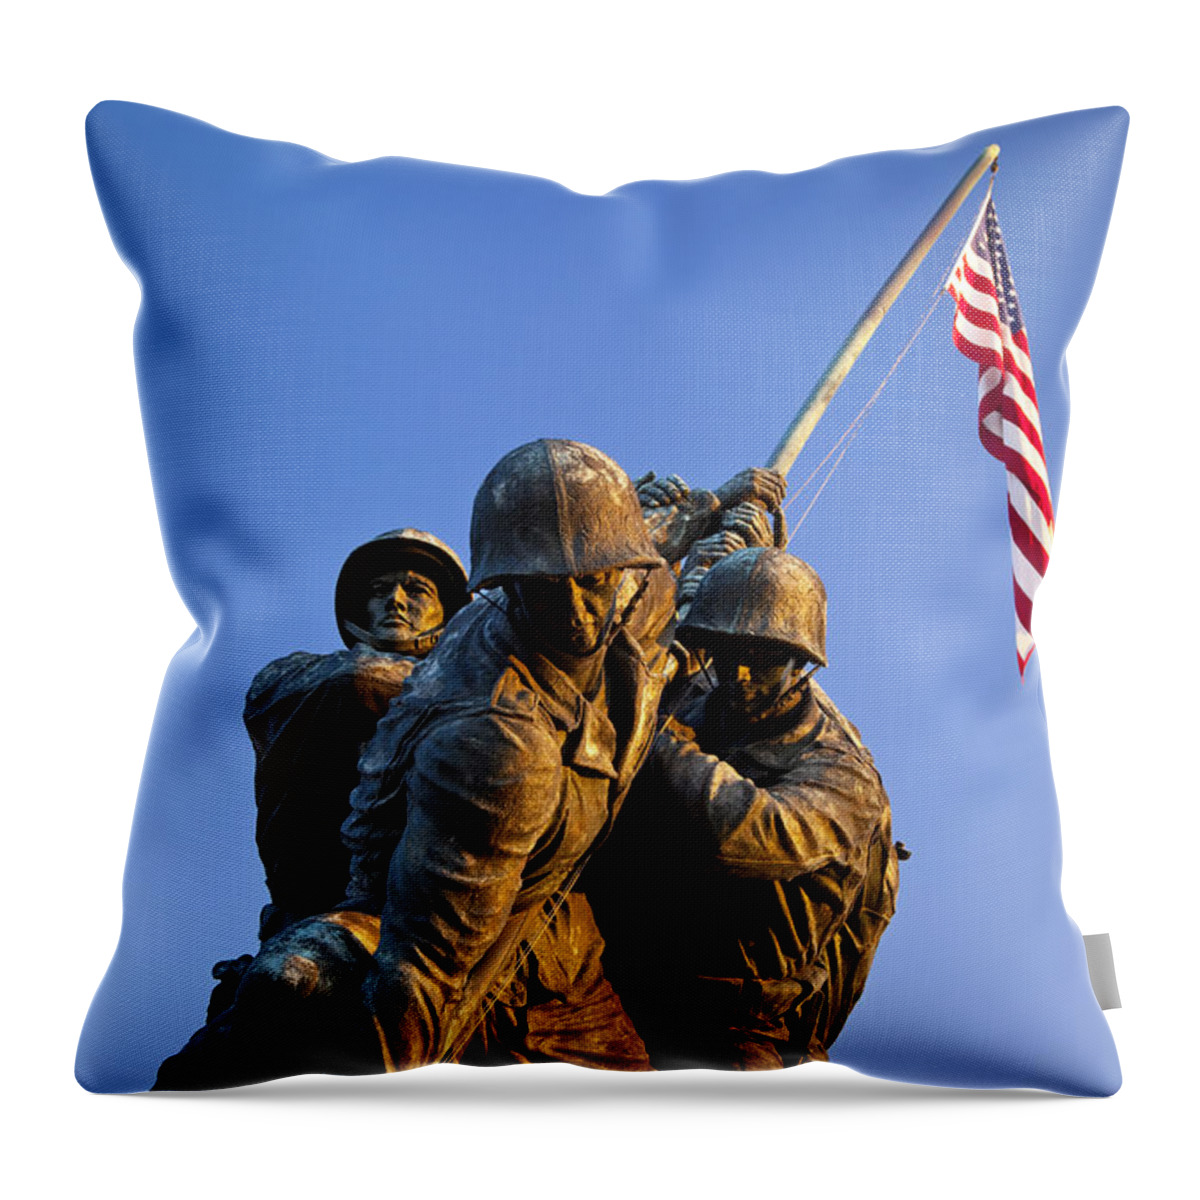 Iwo Jima Throw Pillow featuring the photograph Iwo Jima Memorial #1 by Brian Jannsen